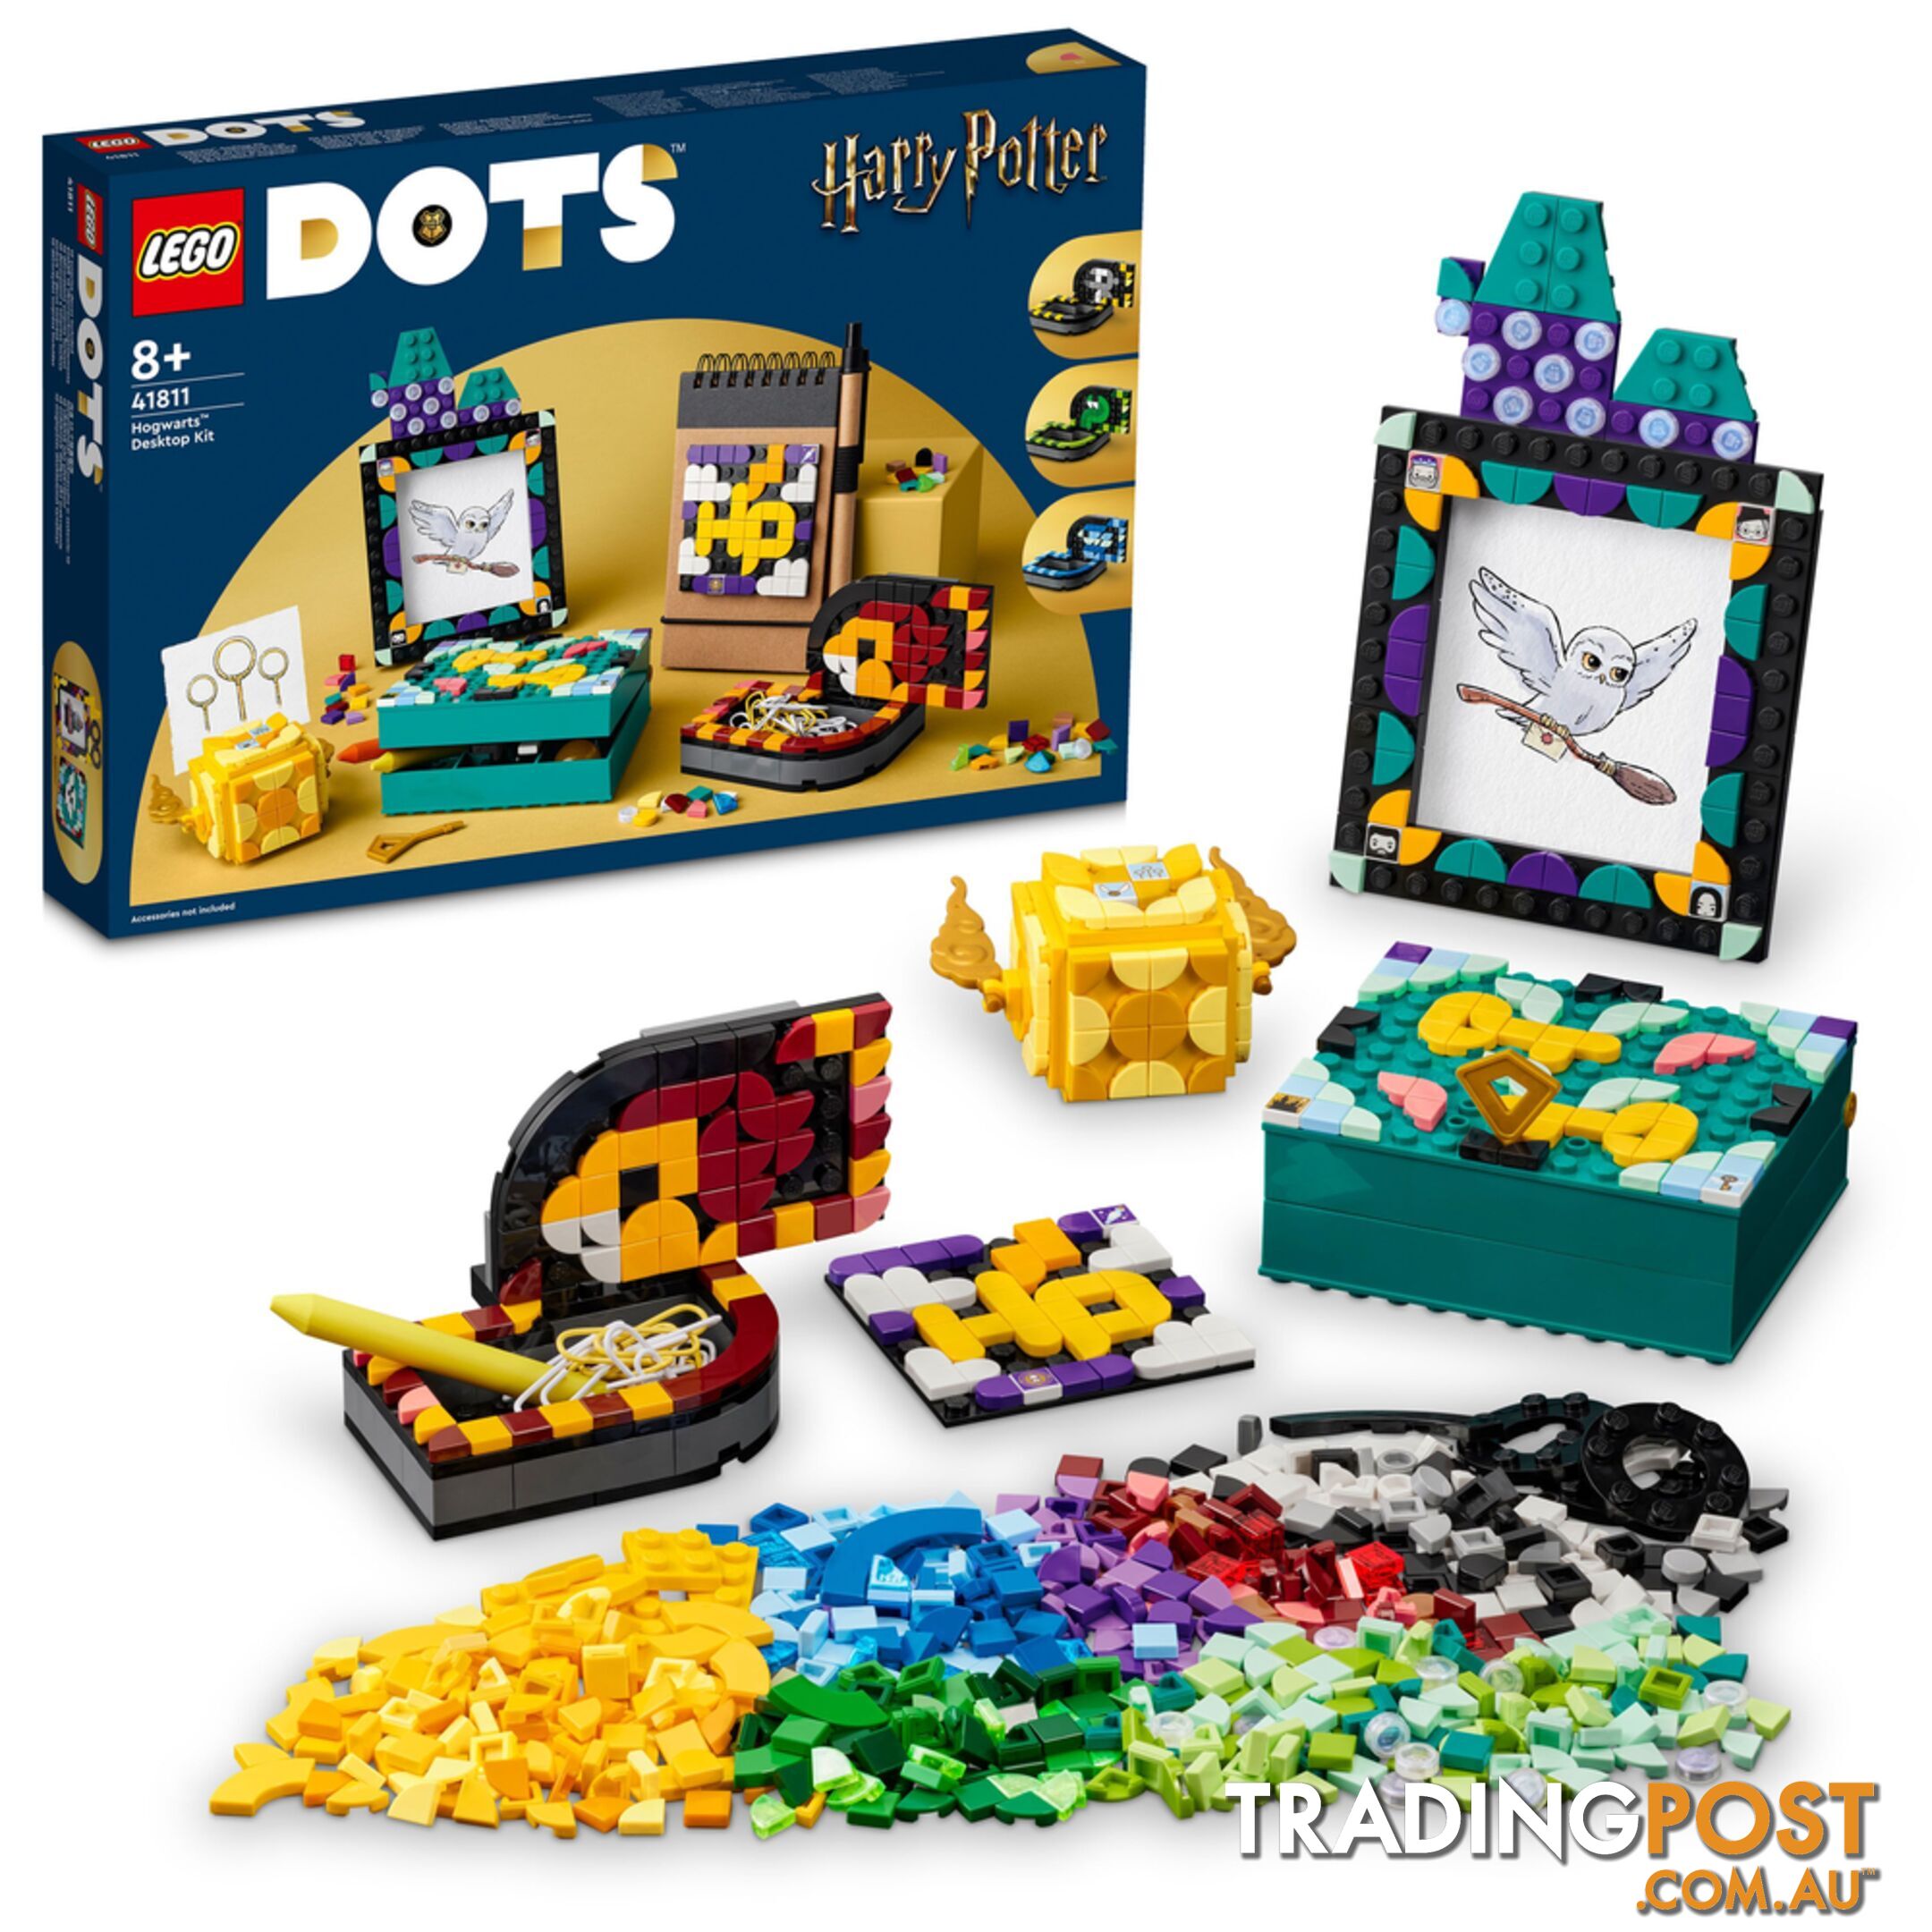 LEGO 41811 Hogwarts Desktop Kit - Dots - 5702017425115